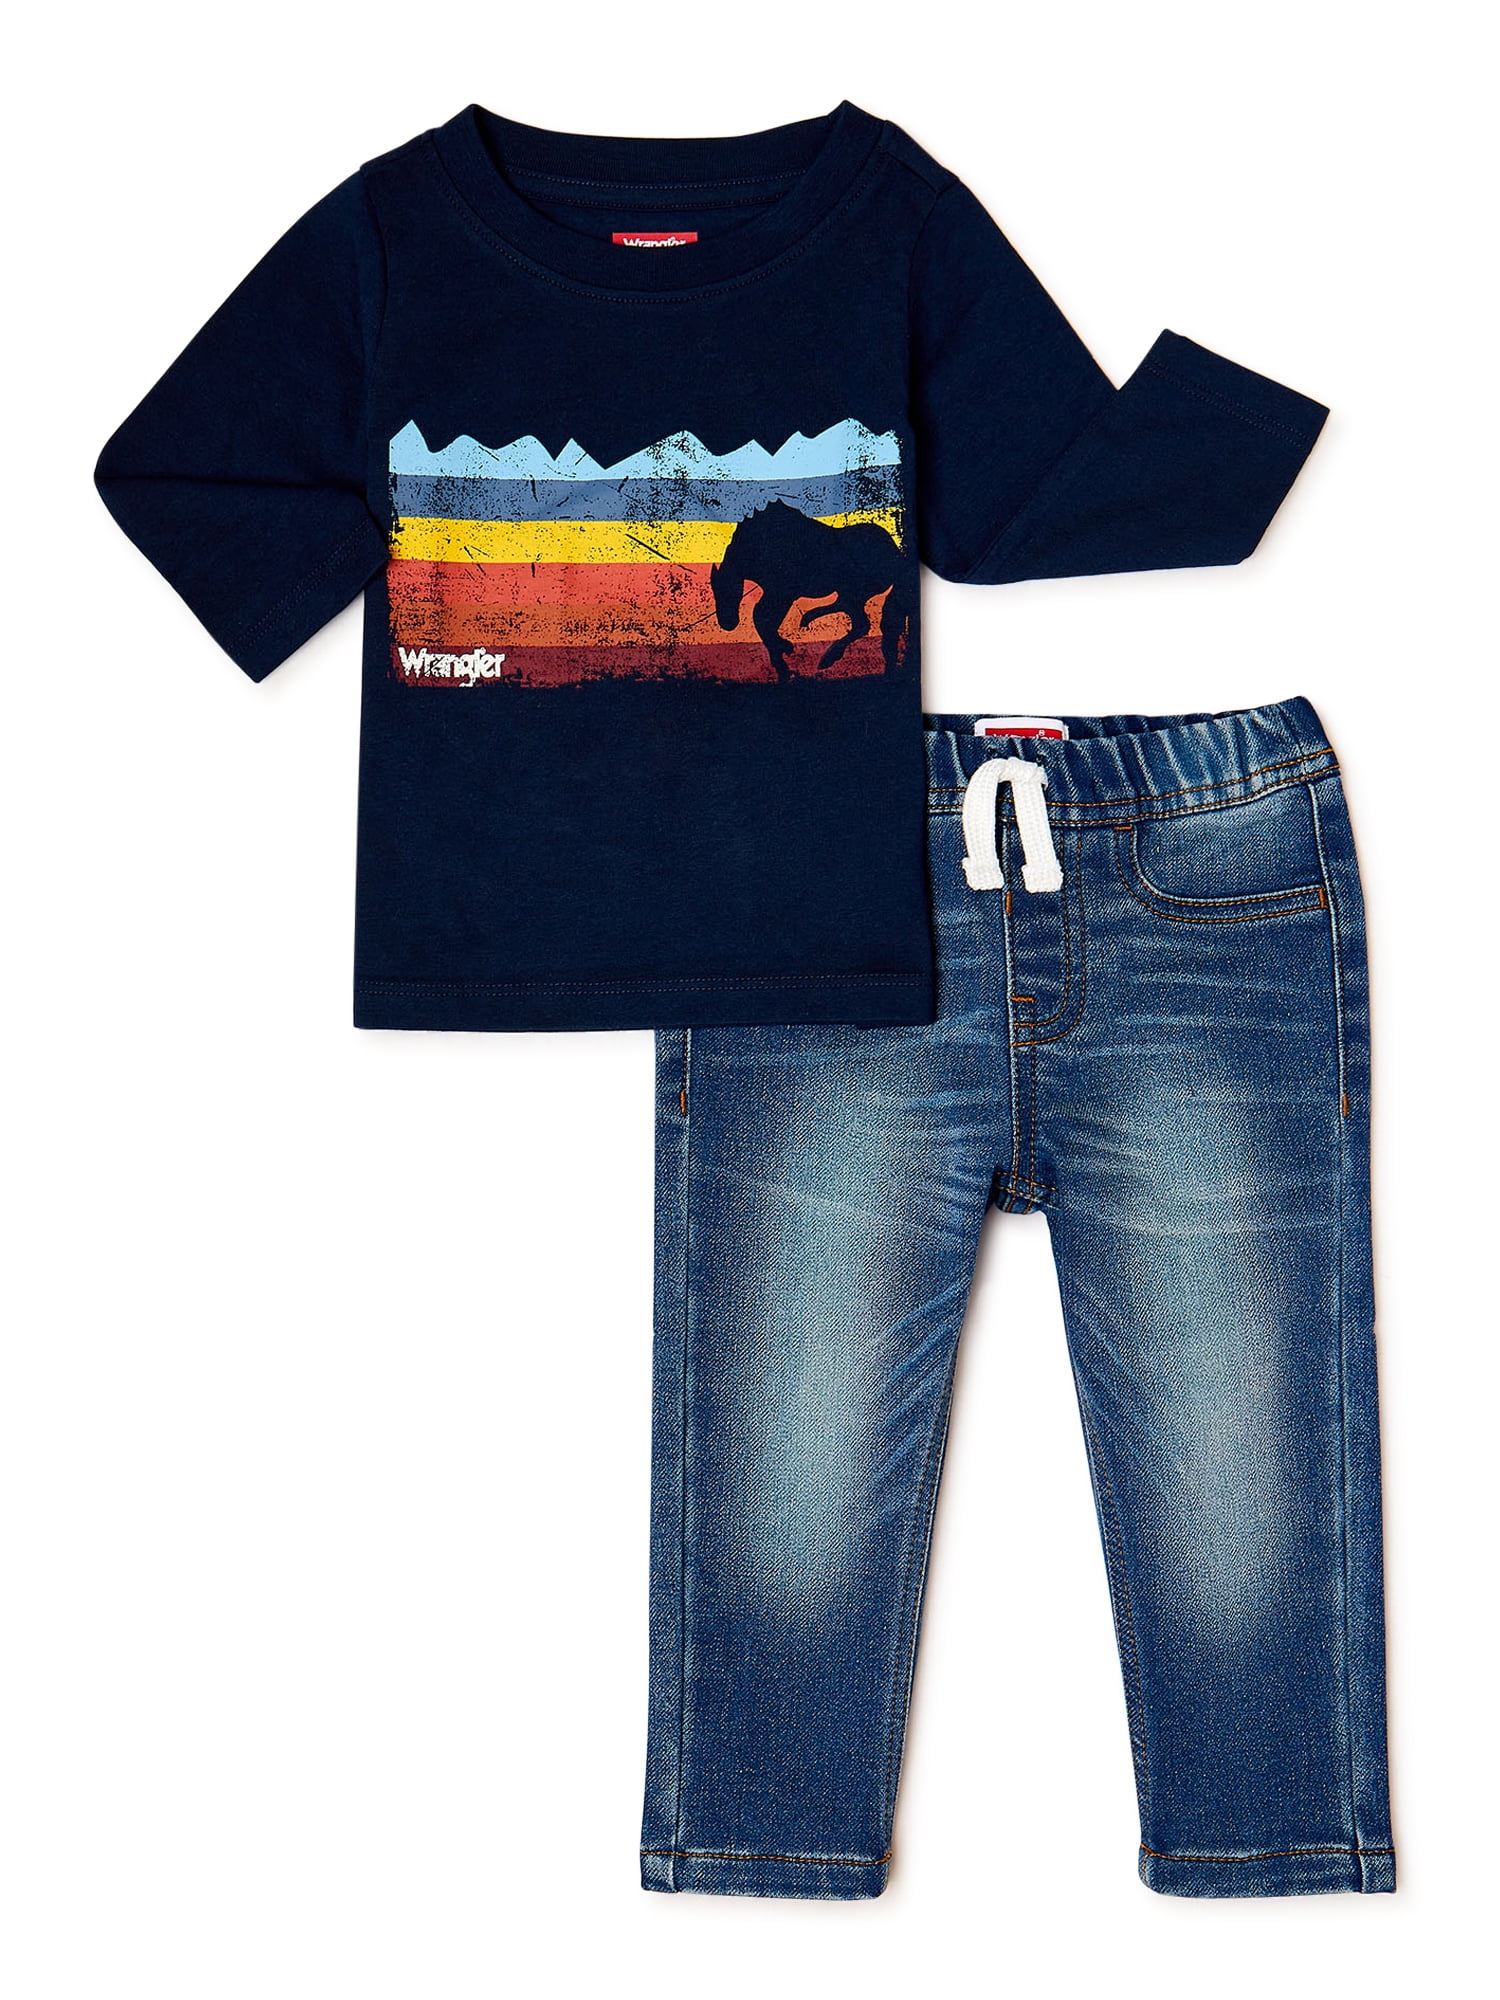 Wrangler Infant Boys Shirt and Pants-Toddler, 2-Pack 